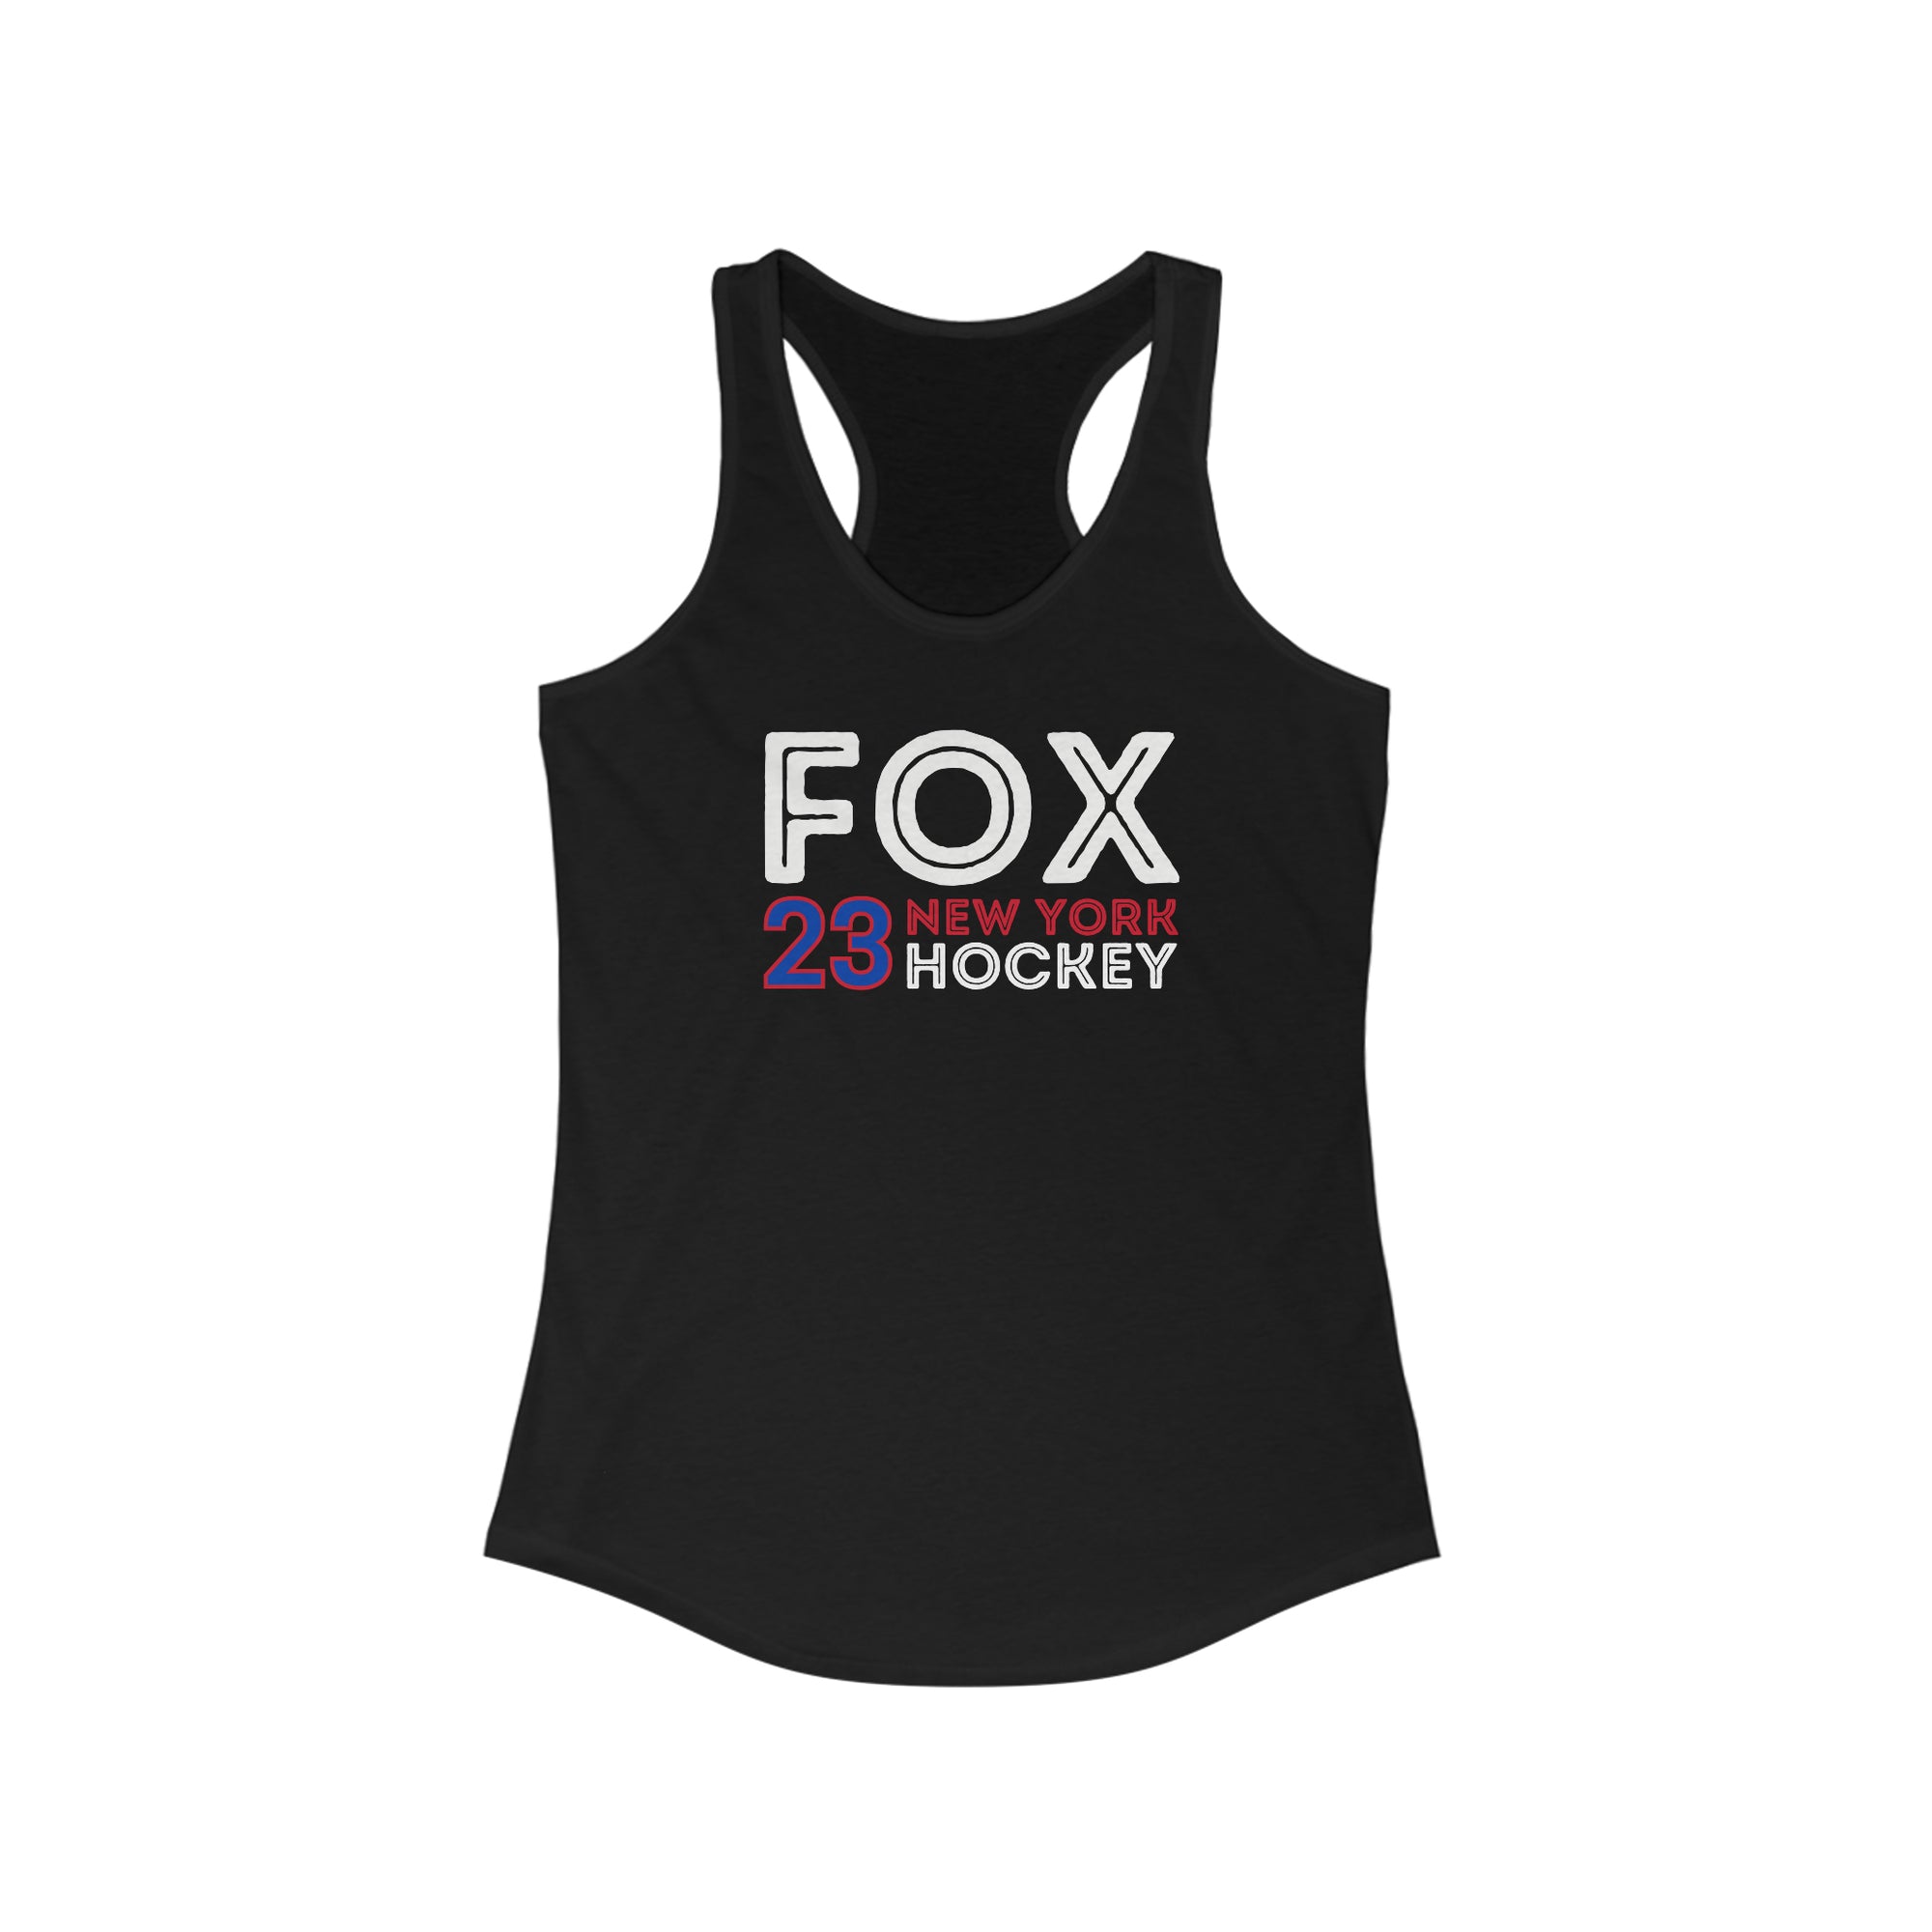 Fox 23 New York Hockey Grafitti Wall Design Women's Ideal Racerback Tank Top